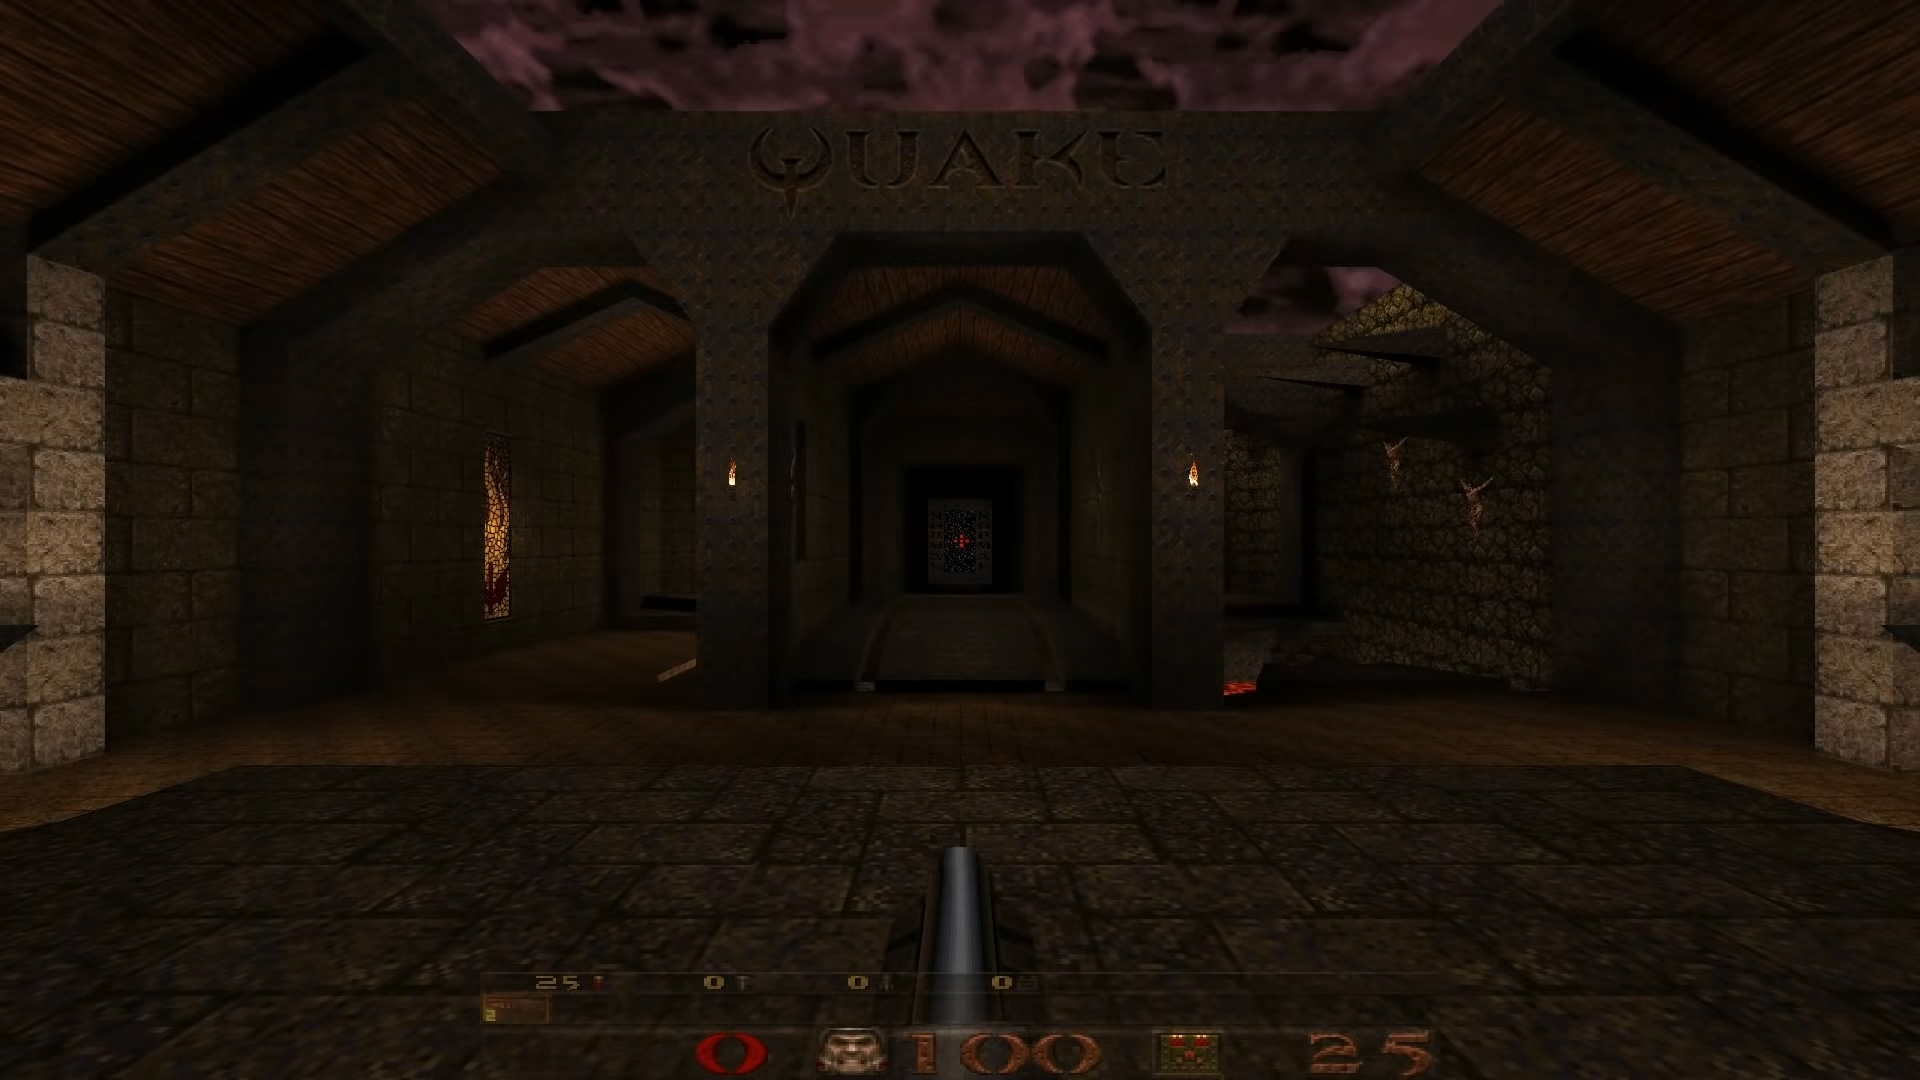 Quake Level Select